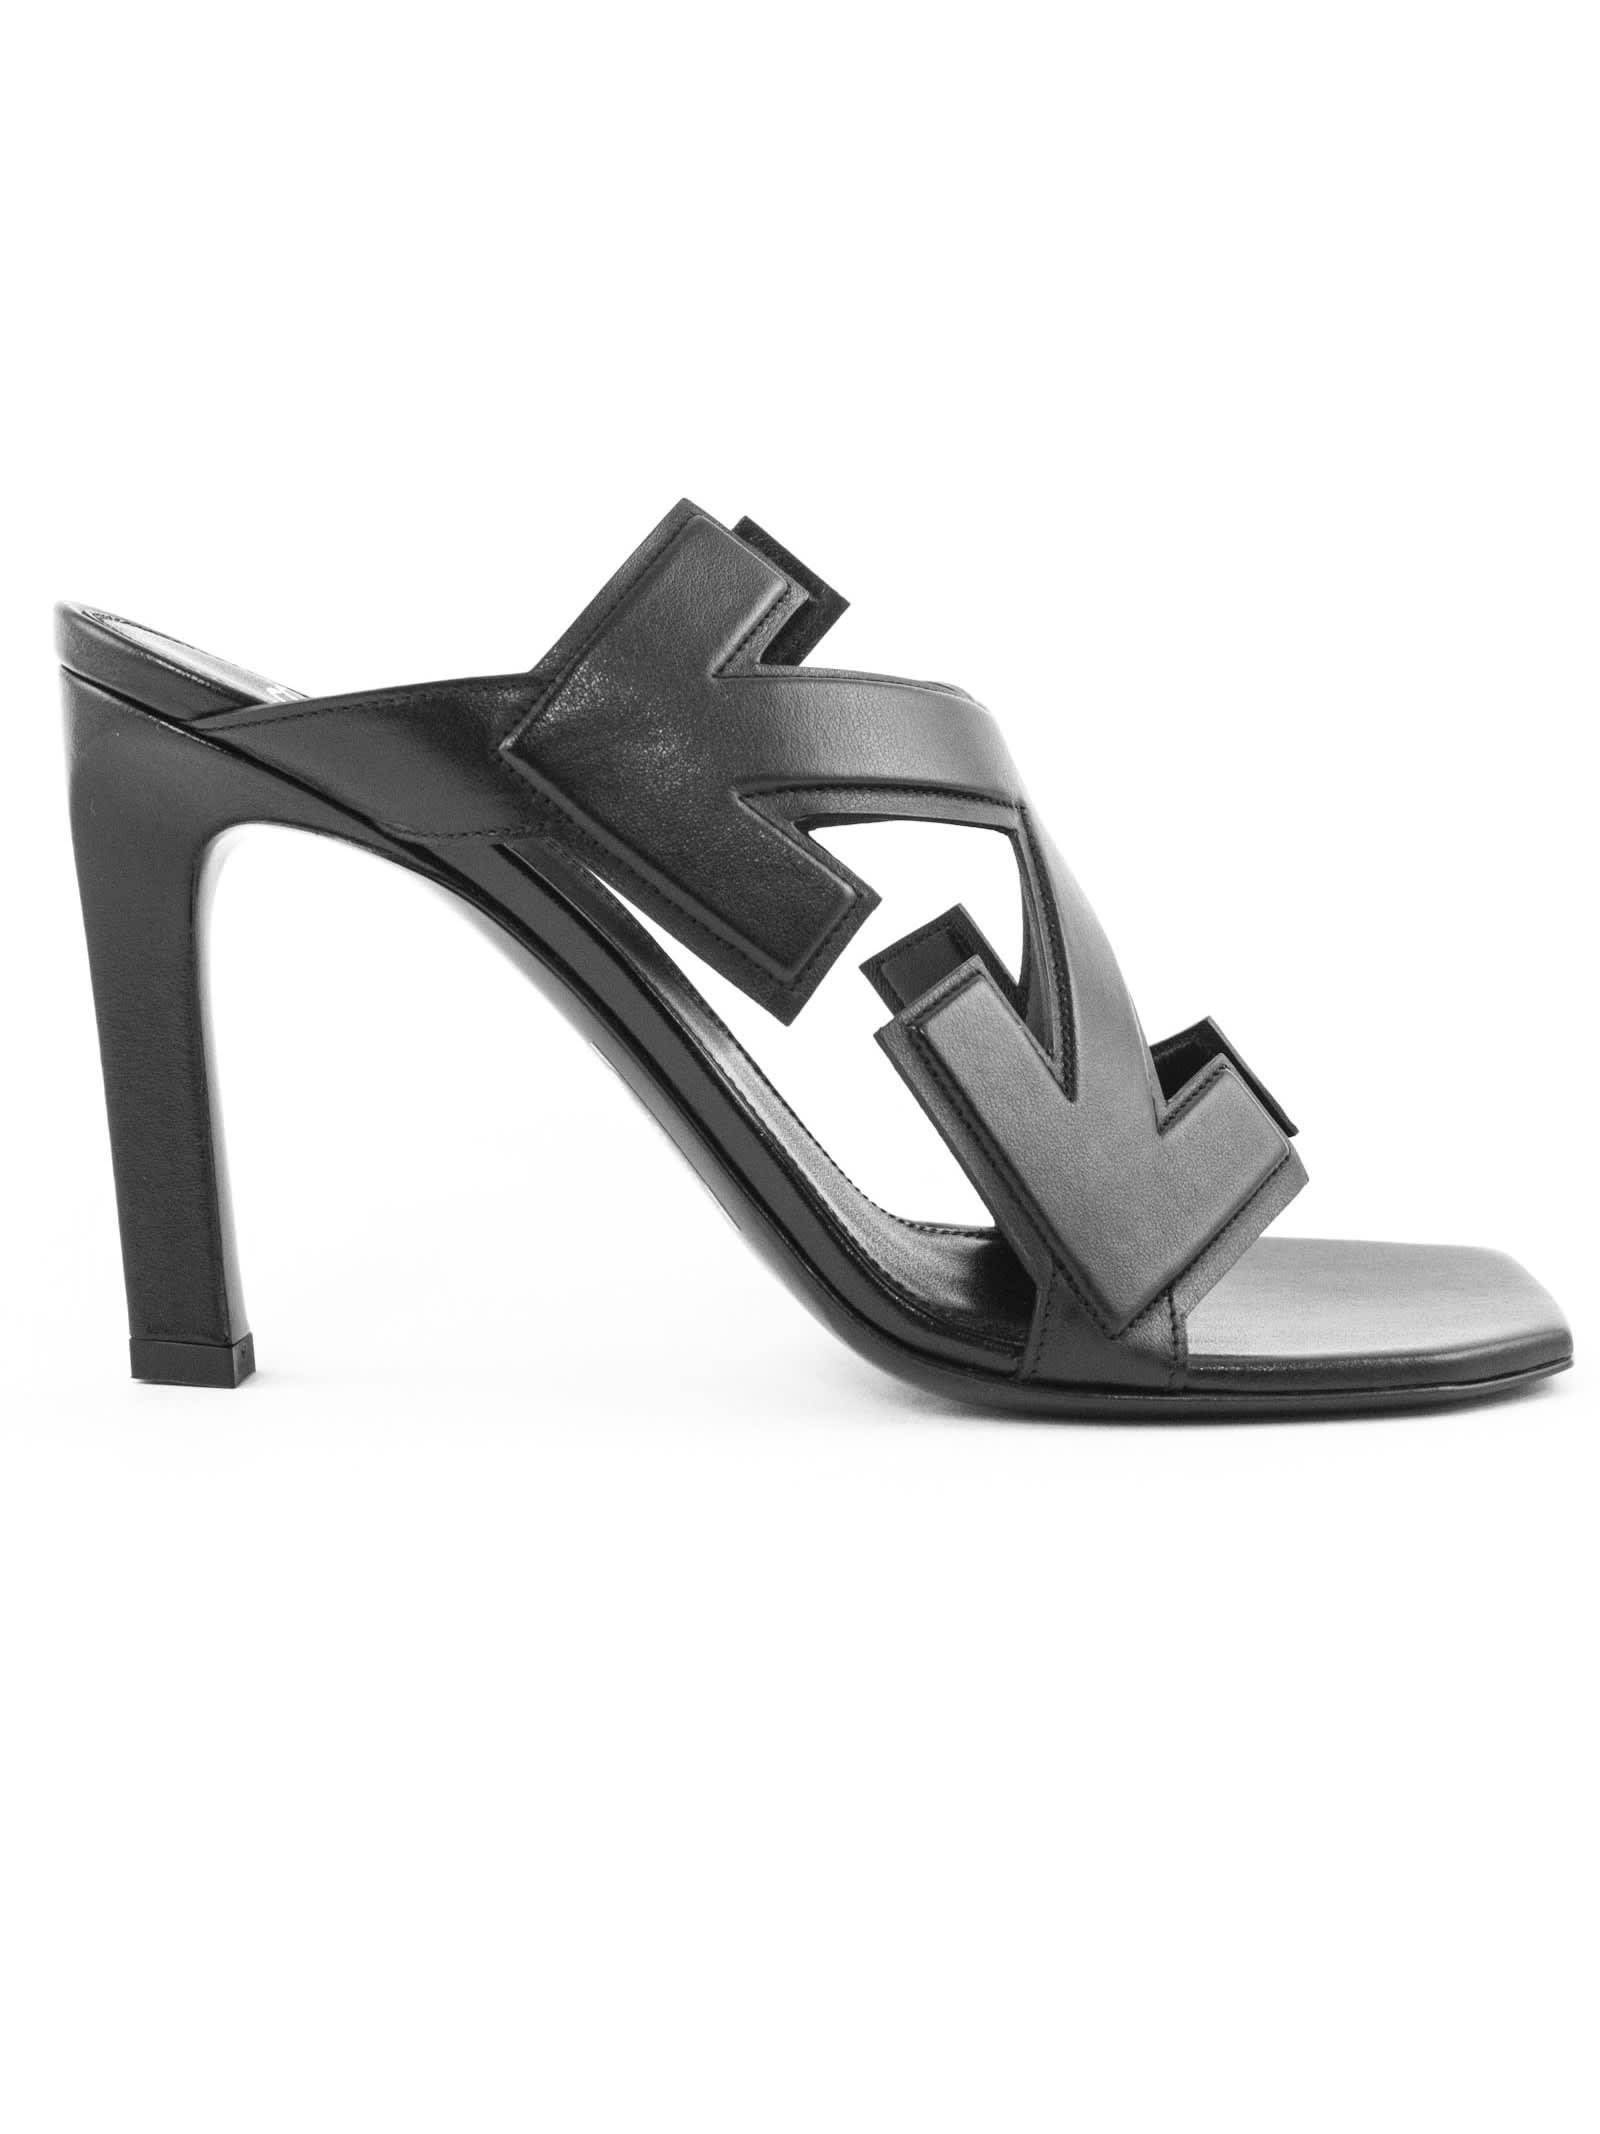 Off-White Black Leather Sandal